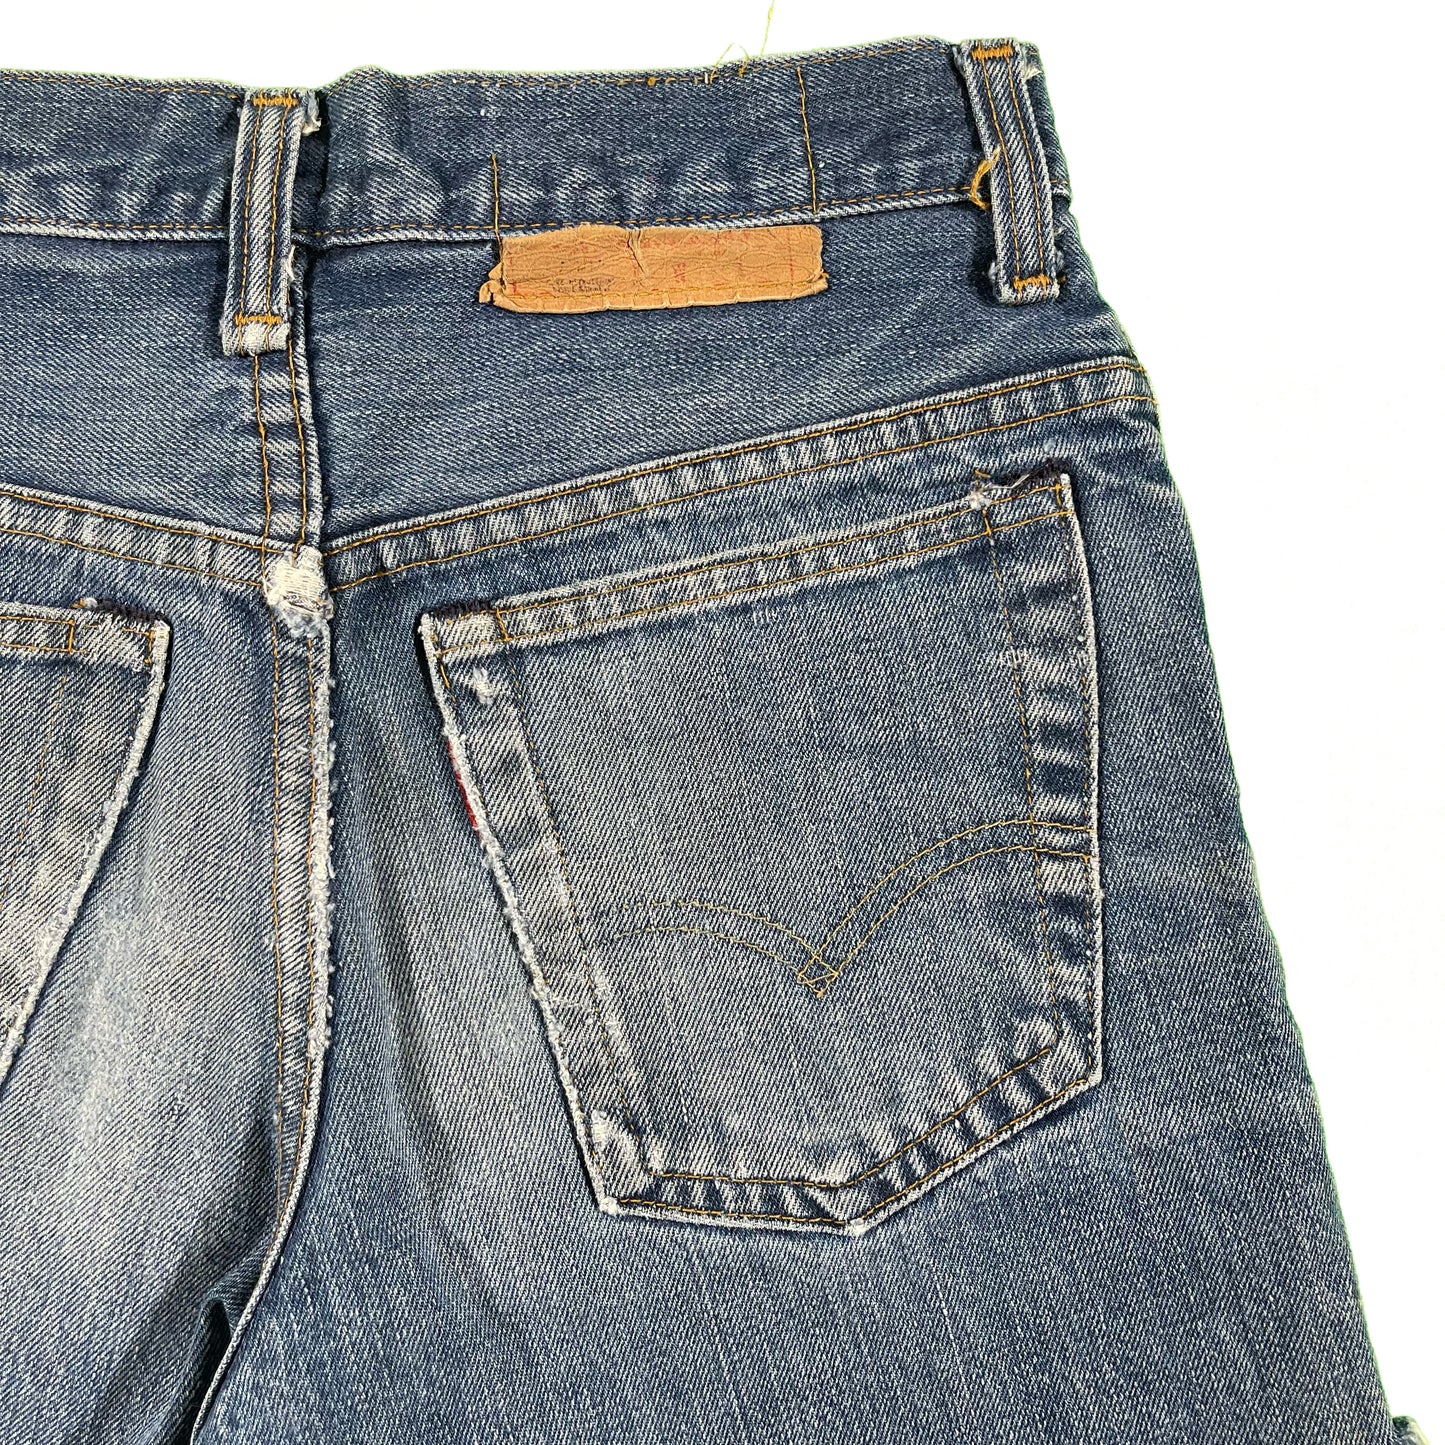 60s Single Stitch Levi's Cutoff Shorts - 27x5